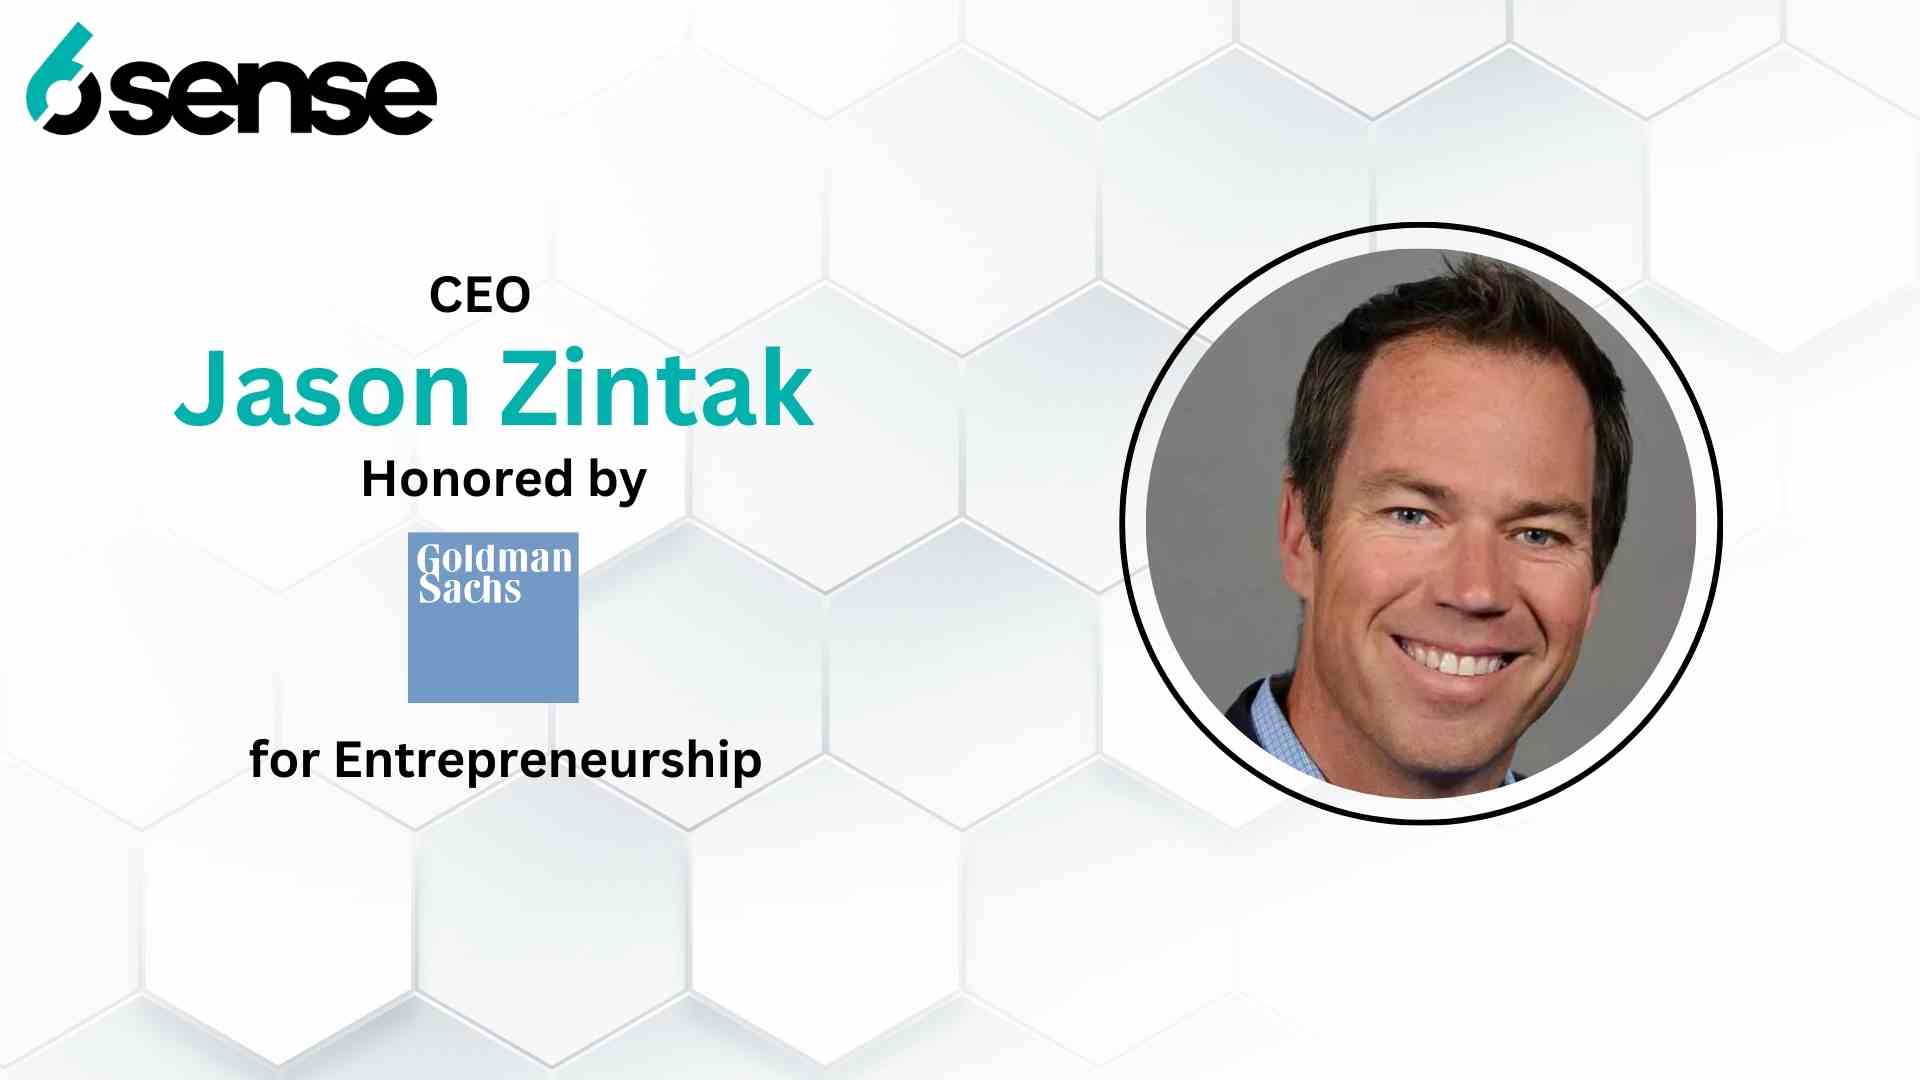 6sense CEO, Jason Zintak, Honored by Goldman Sachs for Entrepreneurship